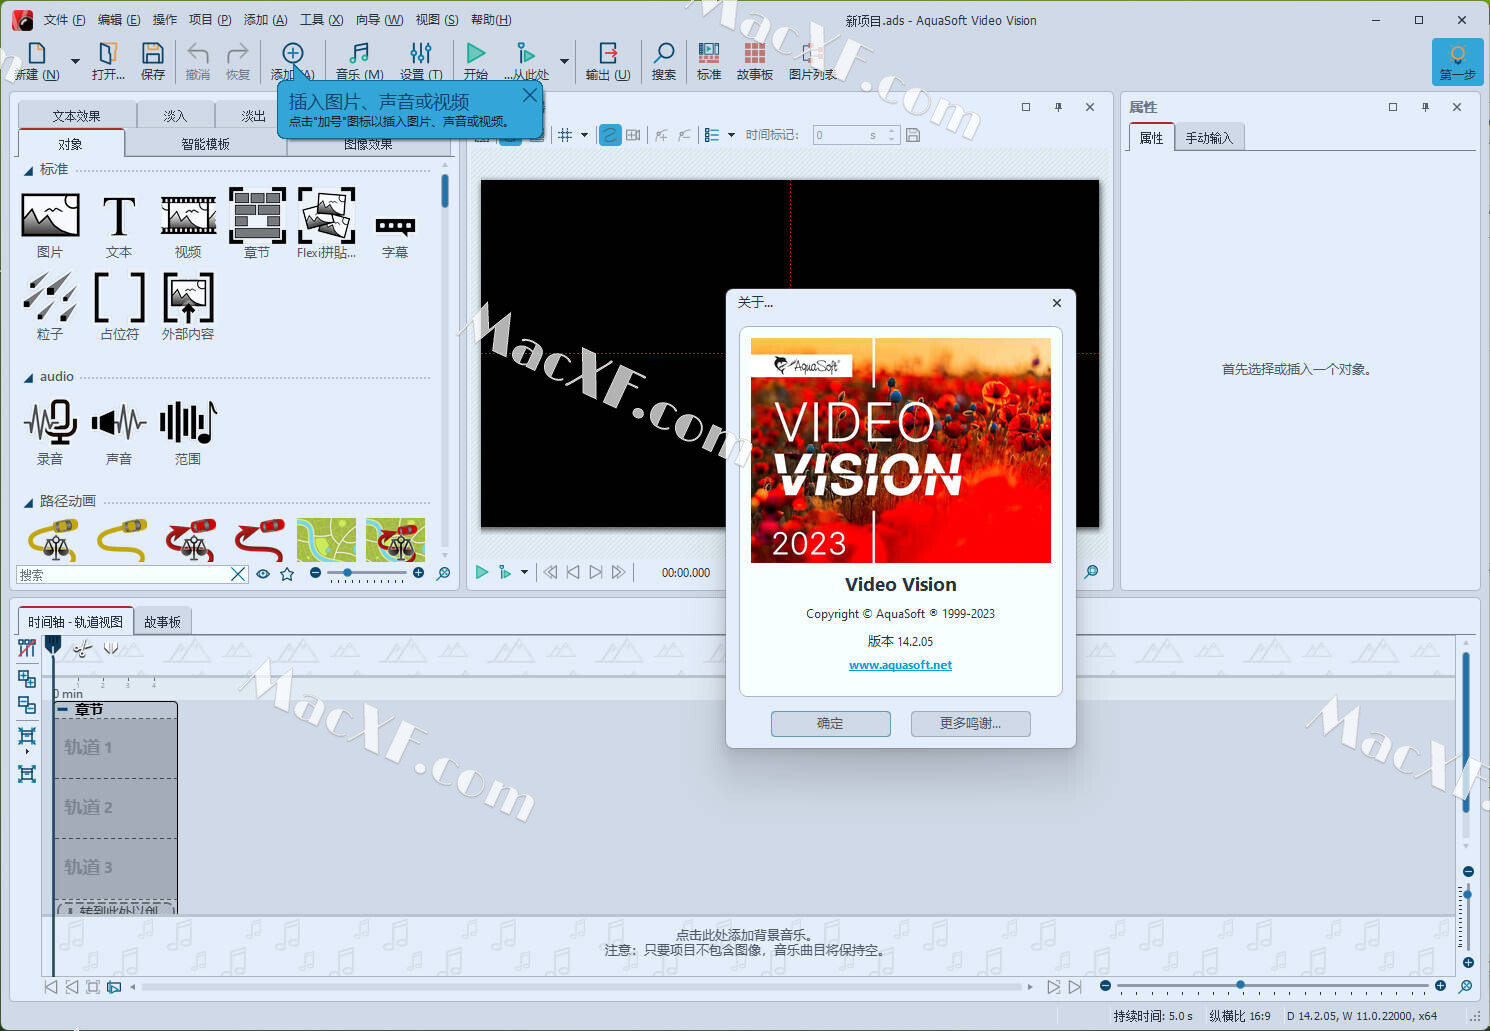 for apple instal AquaSoft Video Vision 14.2.09